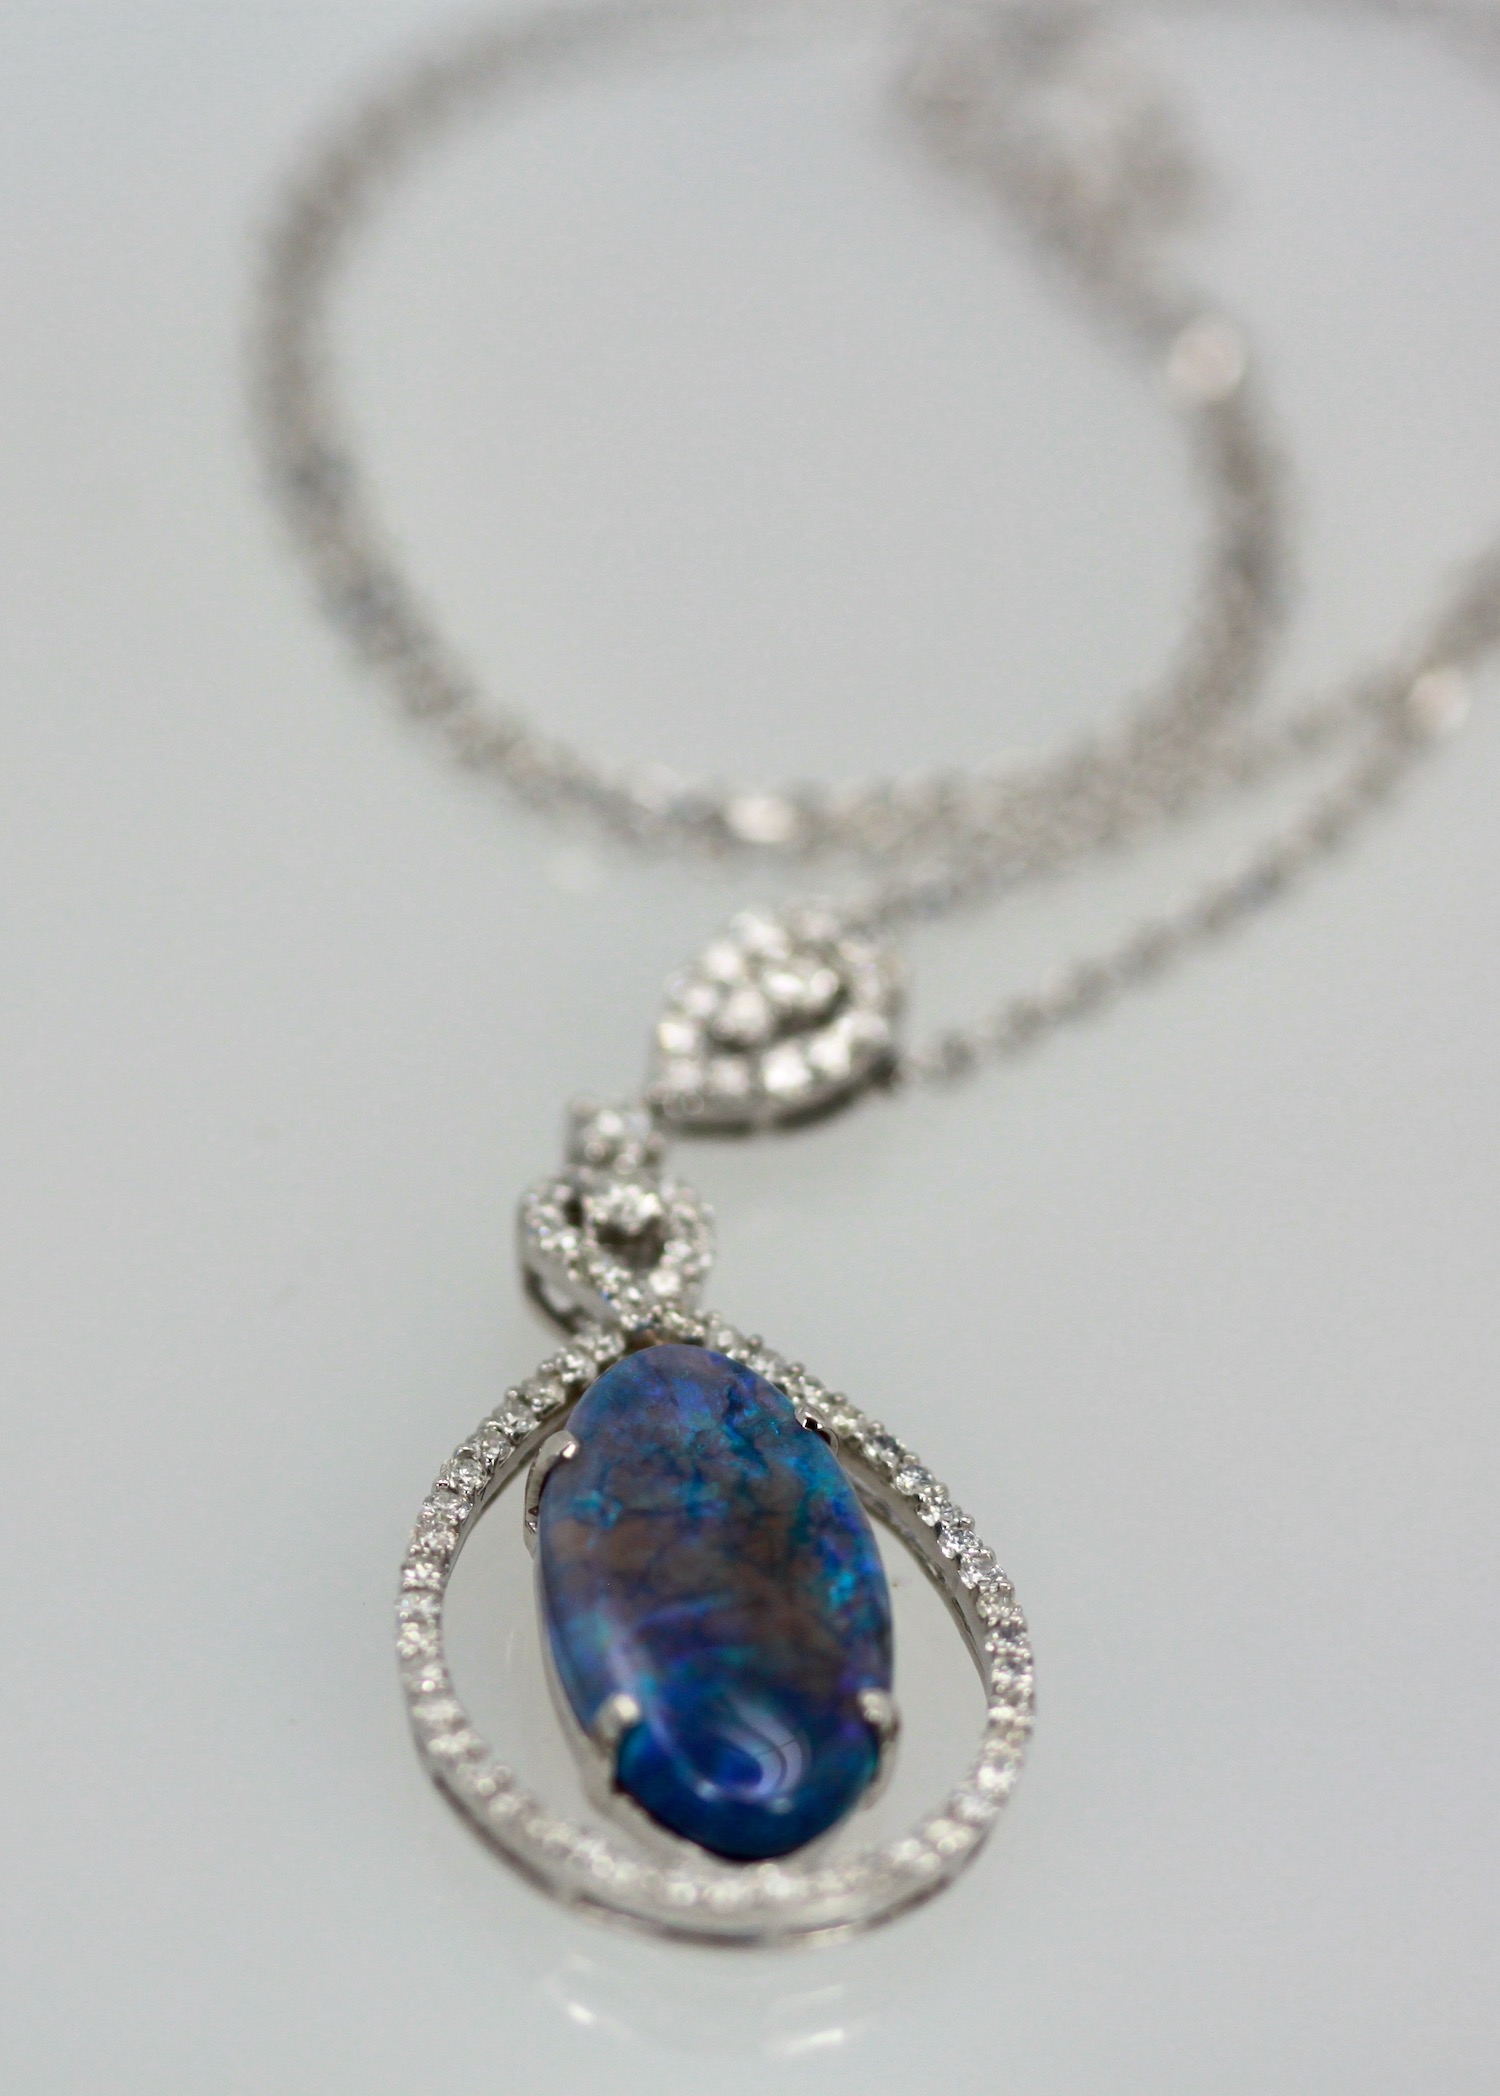 Black Crystal Opal Pendant with Diamond Surround – close up